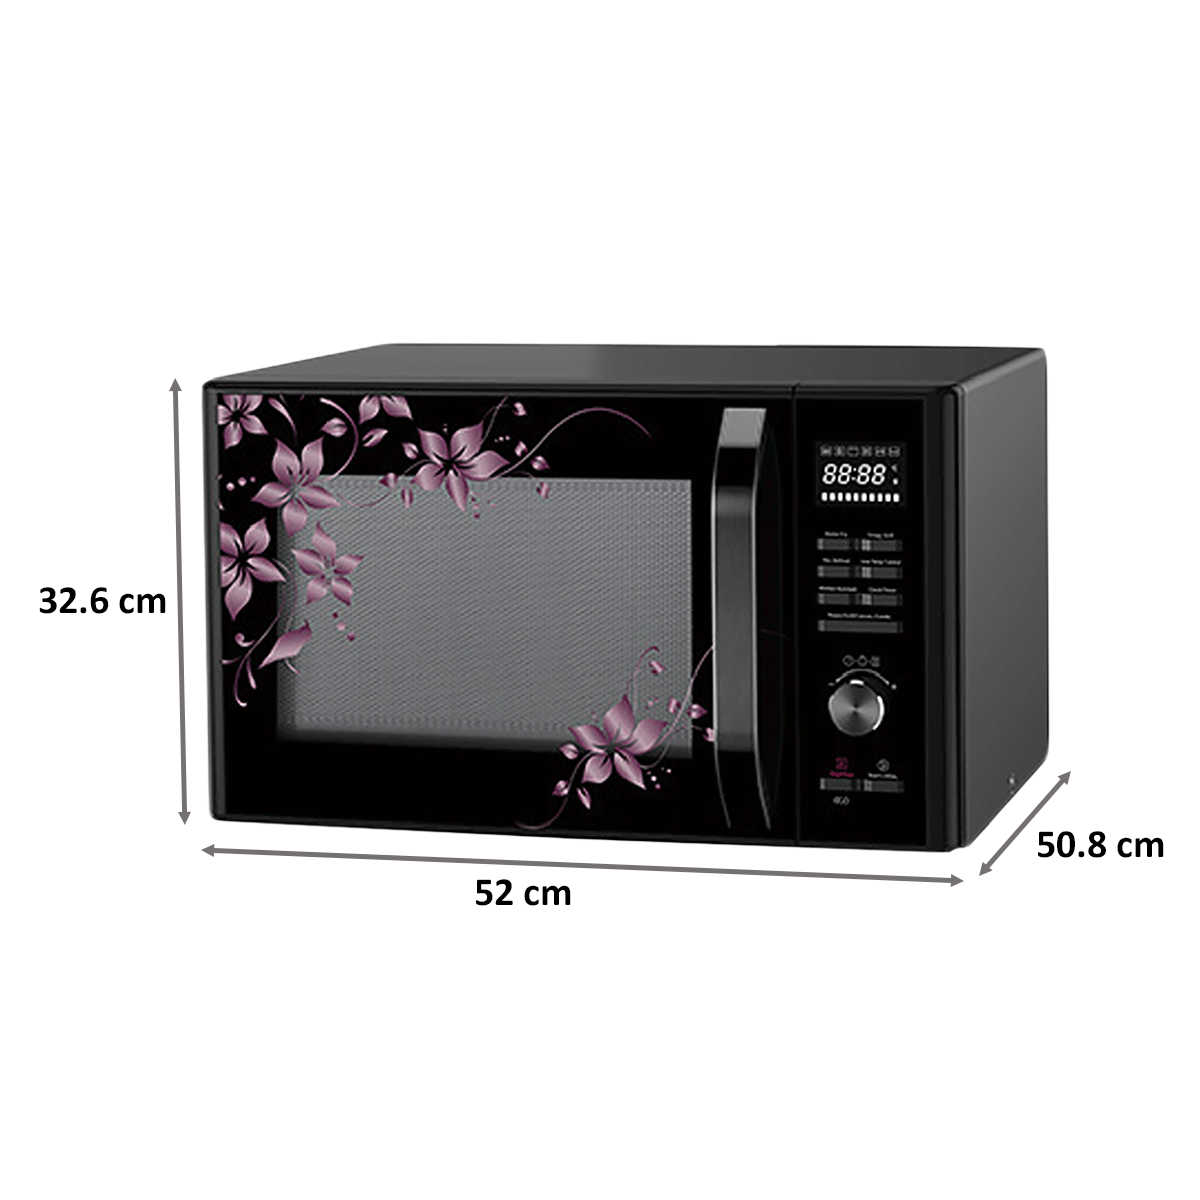 Haier 30 litres Convection Microwave Oven (HIL3001CBSH, Black)_2